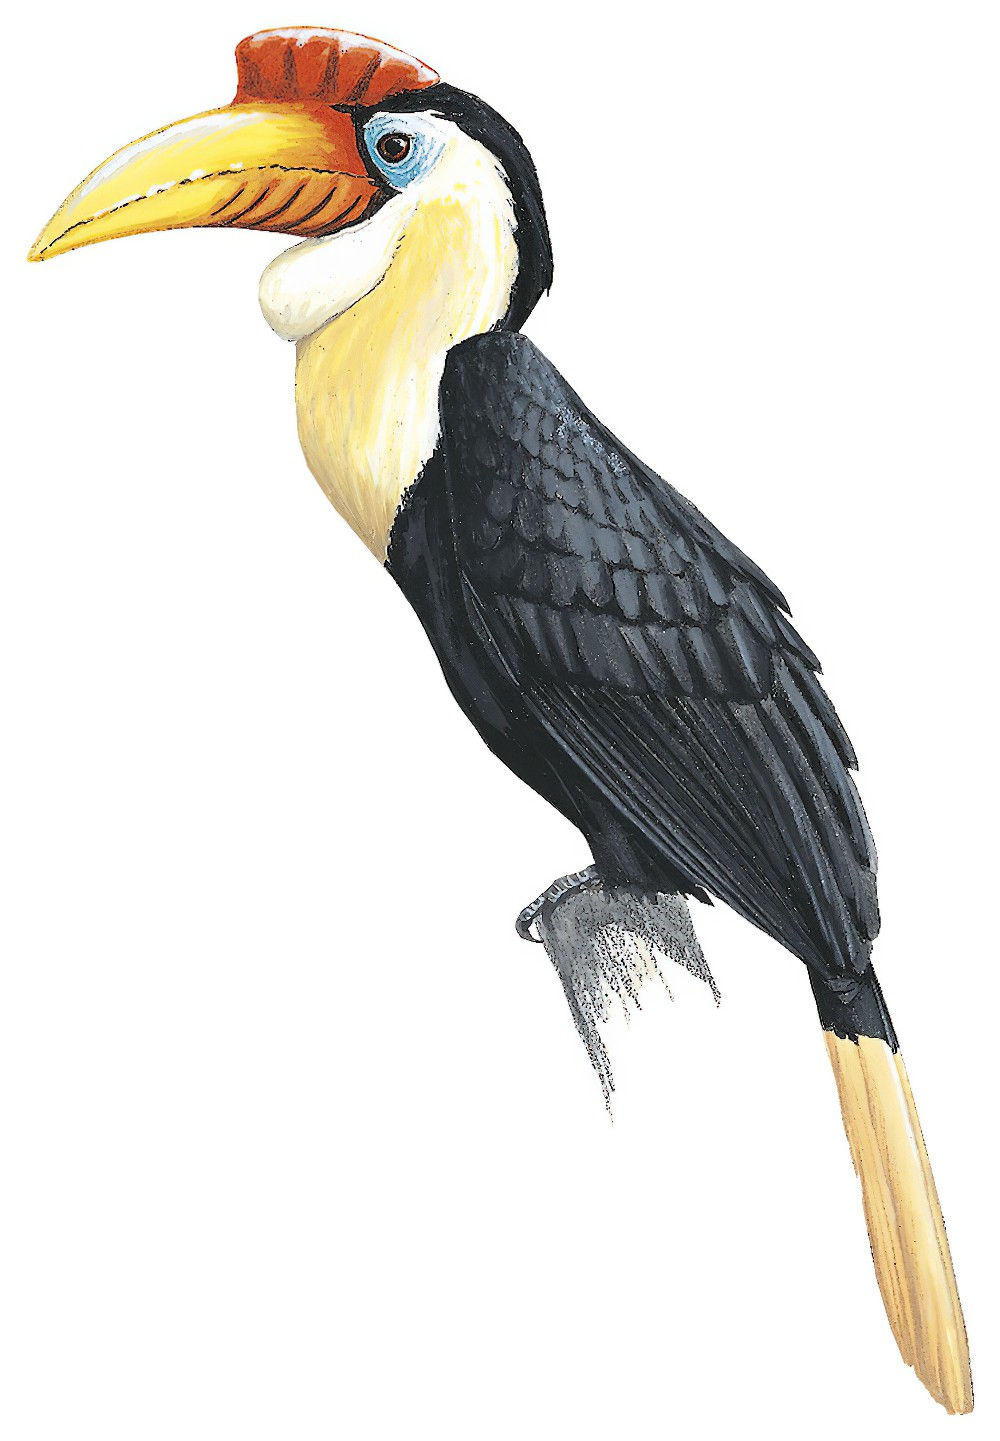 Wrinkled Hornbill / Rhabdotorrhinus corrugatus